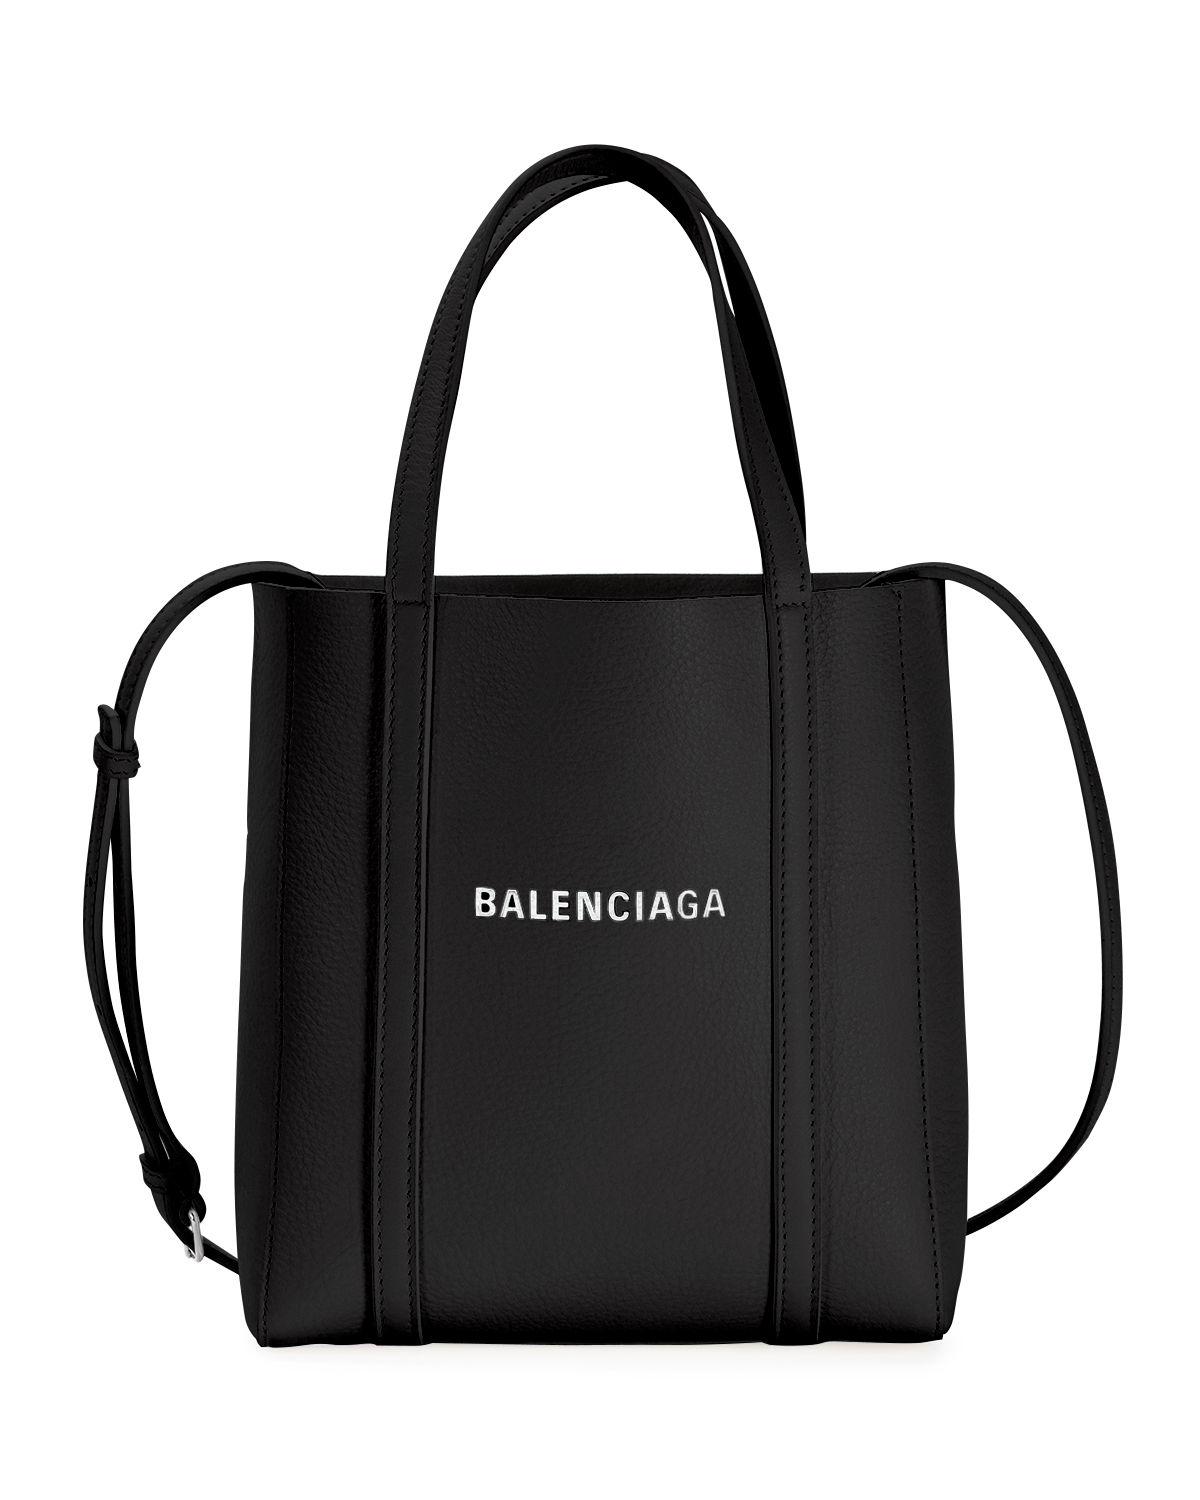 Balenciaga Every Day Xxs Aj Leather Tote Bag in Black - Lyst